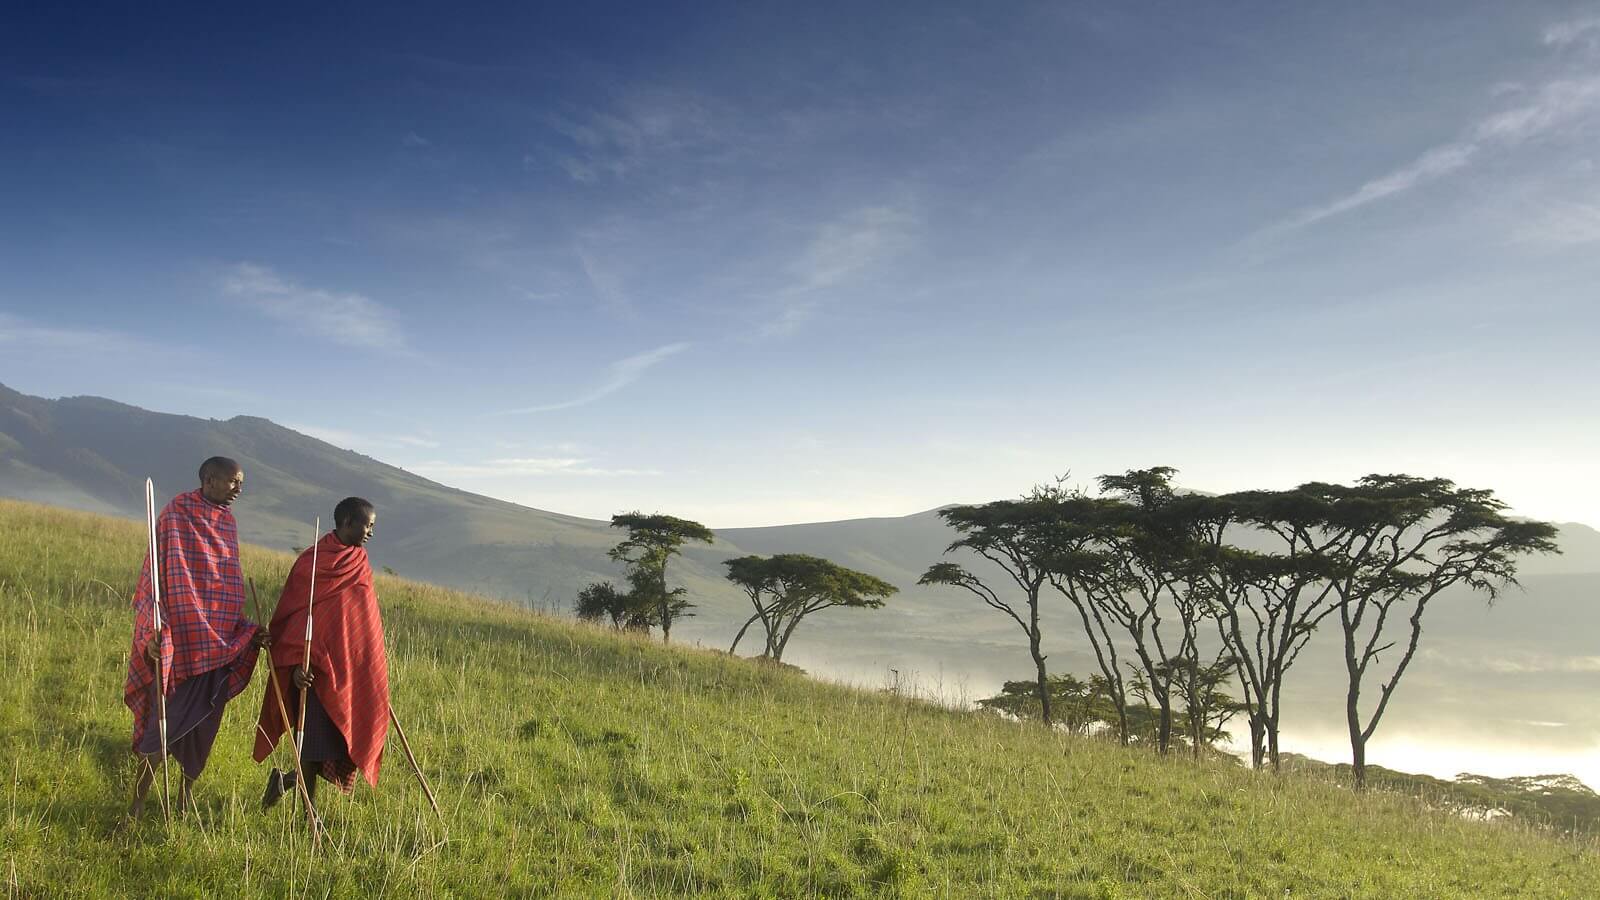 Ngorongoro Crater Safari - Reasons Why You Should Visit Ngorongoro Crater